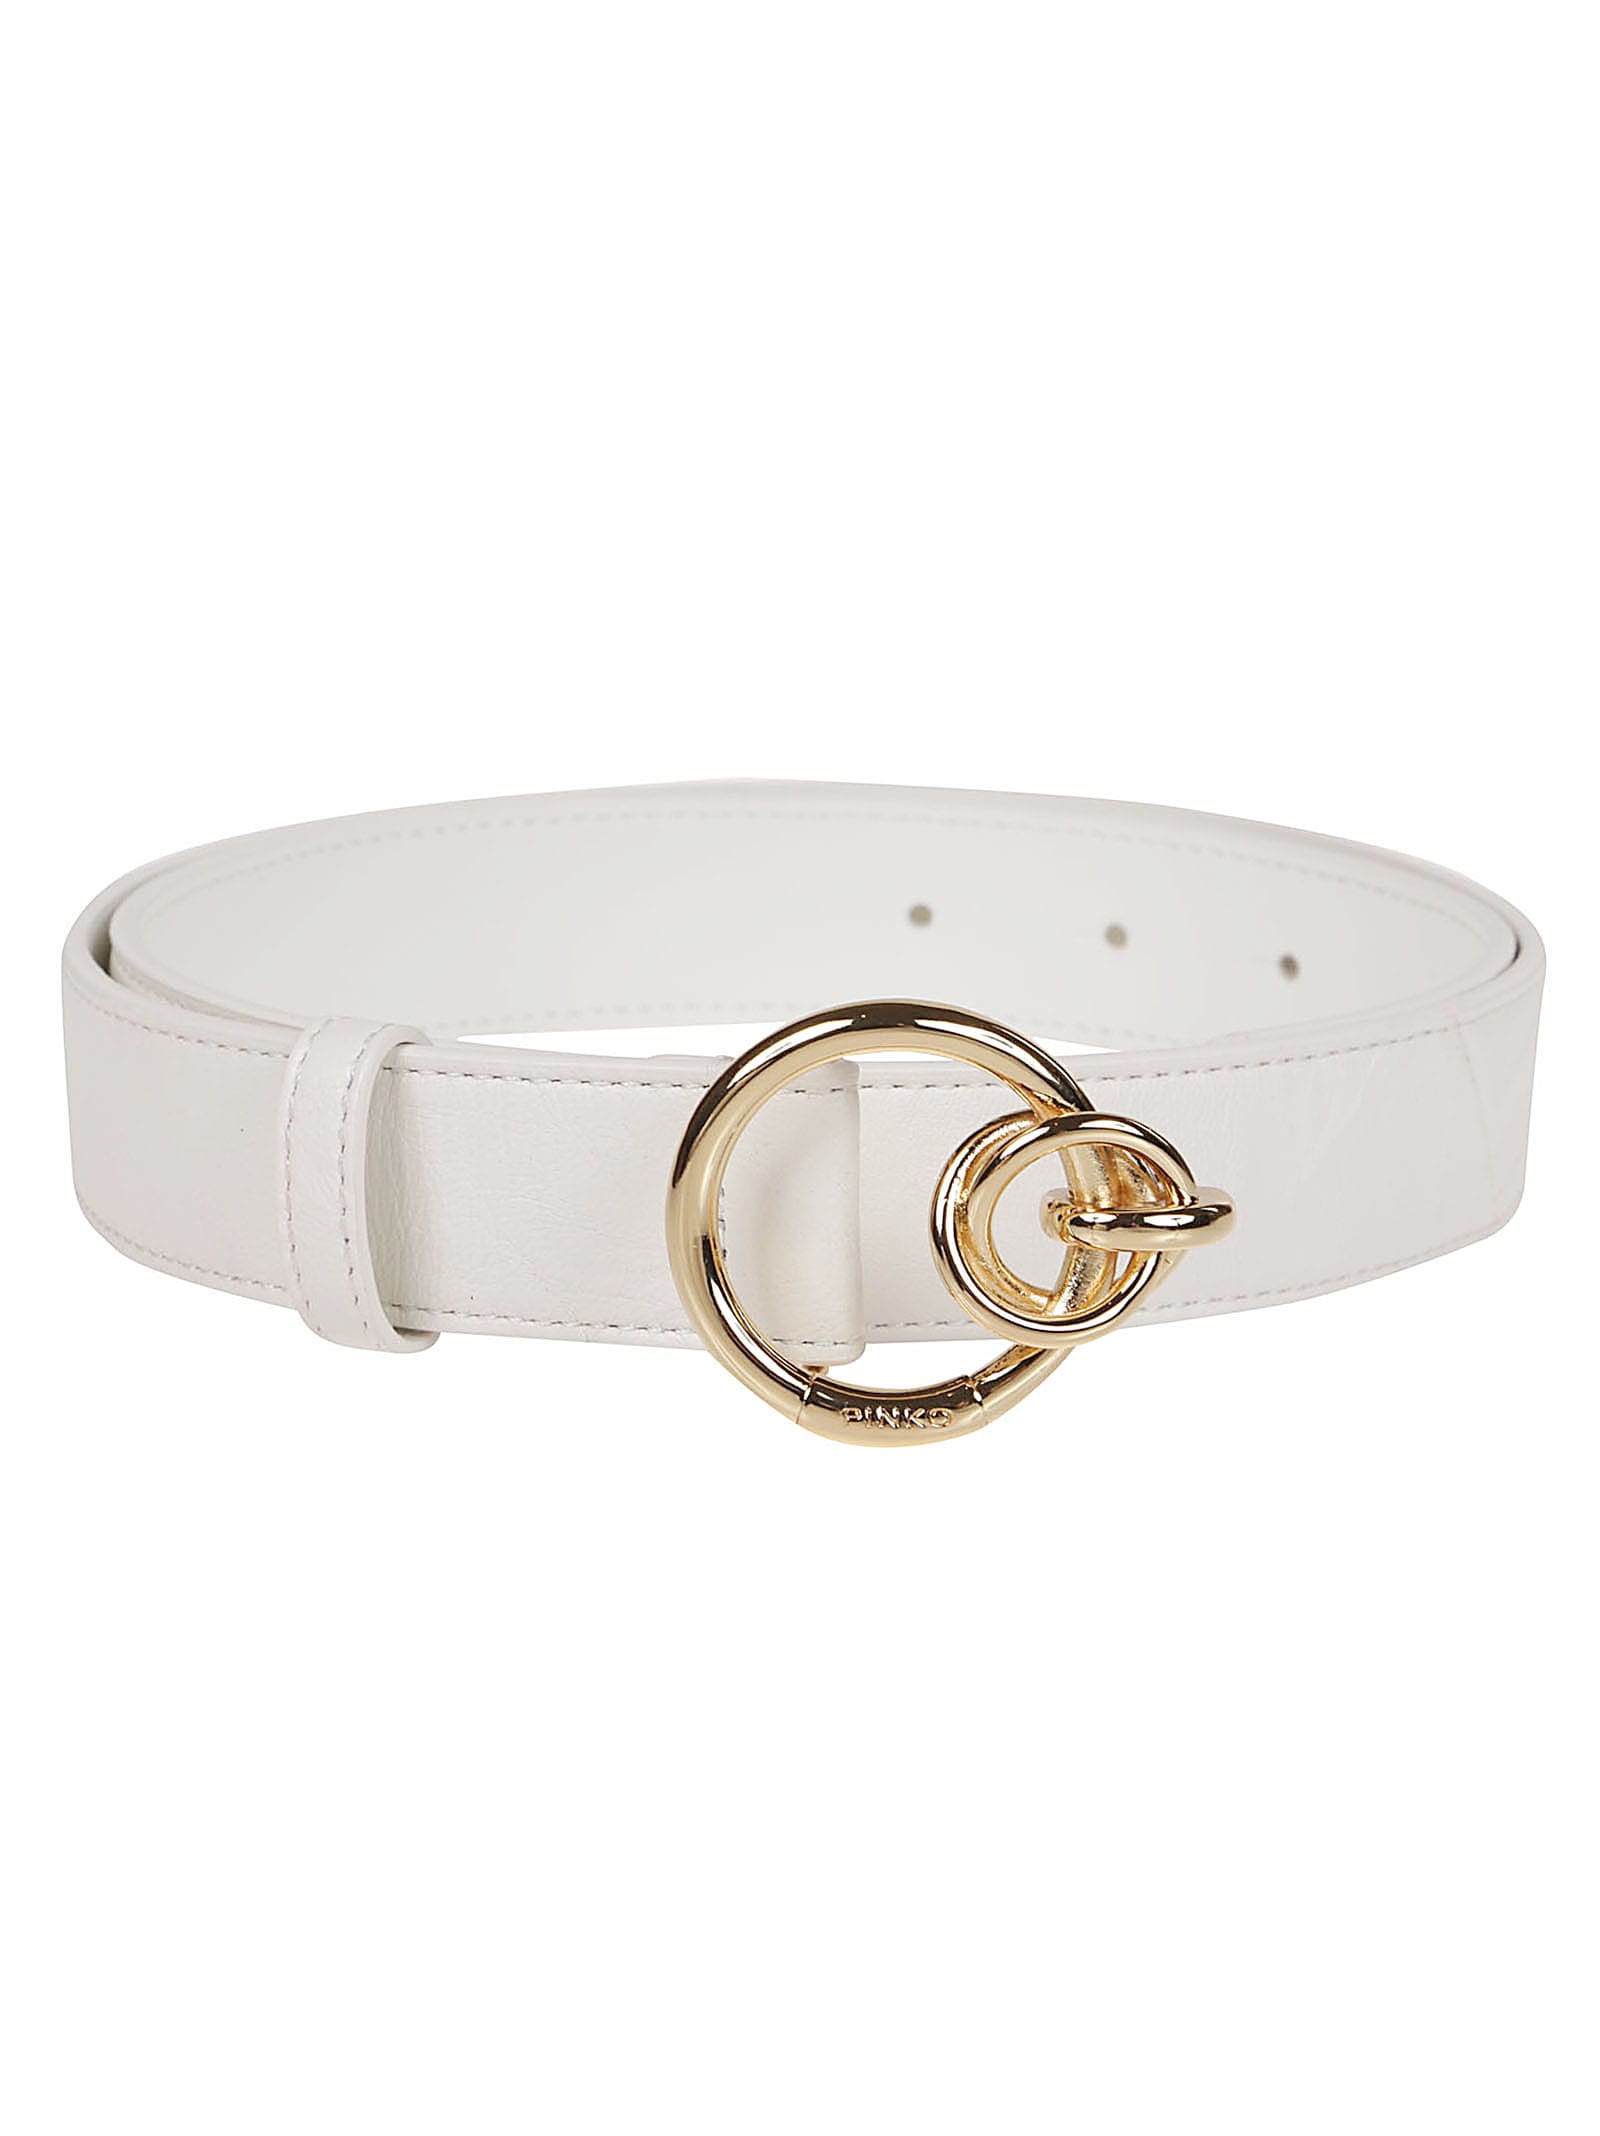 Pinko White Leather Belt